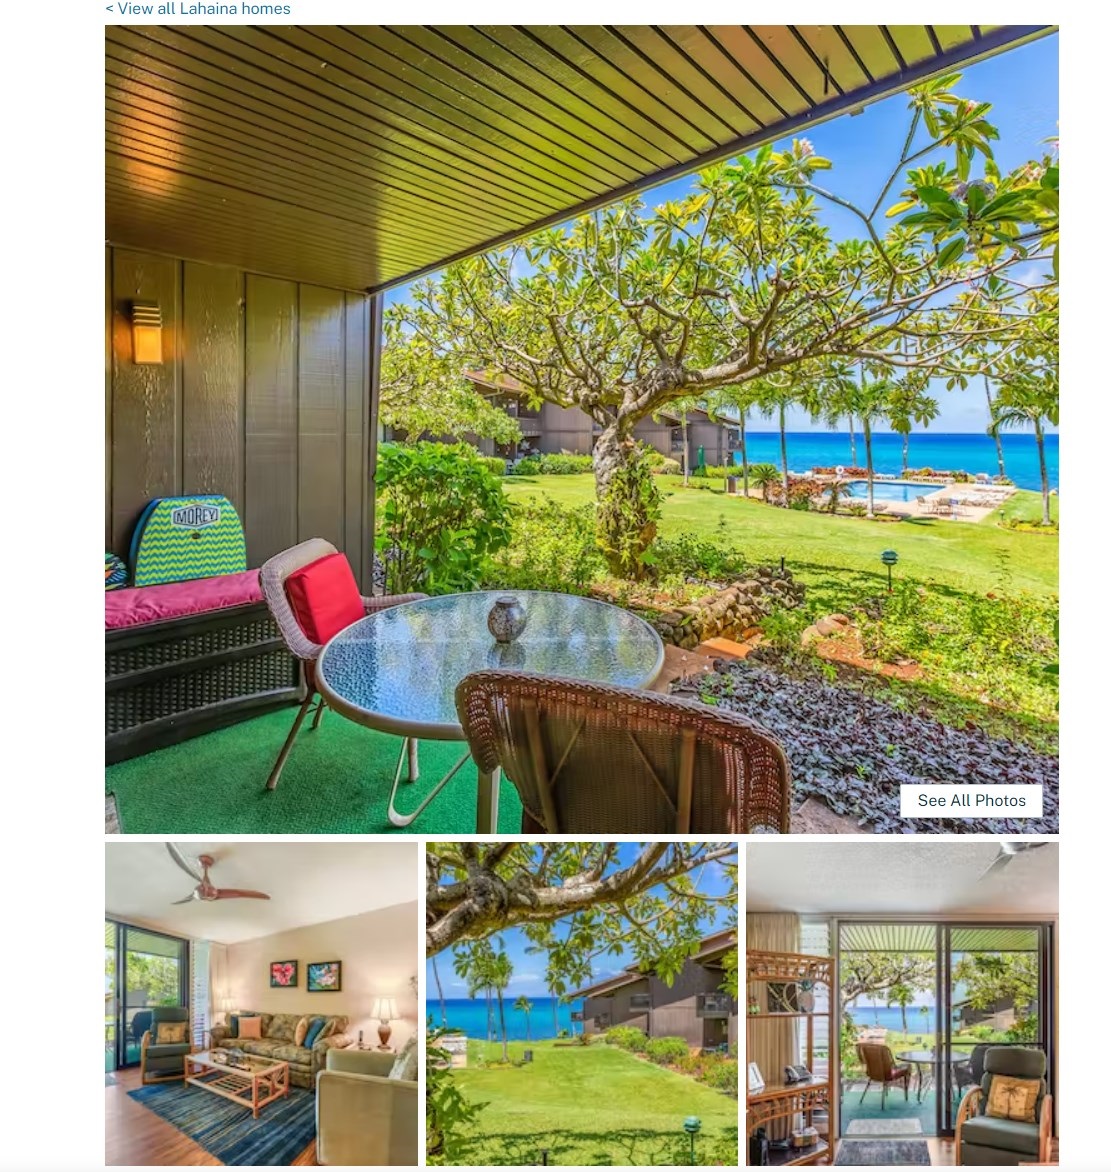 Vacasa vacation rental example in Maui, Hawaii.